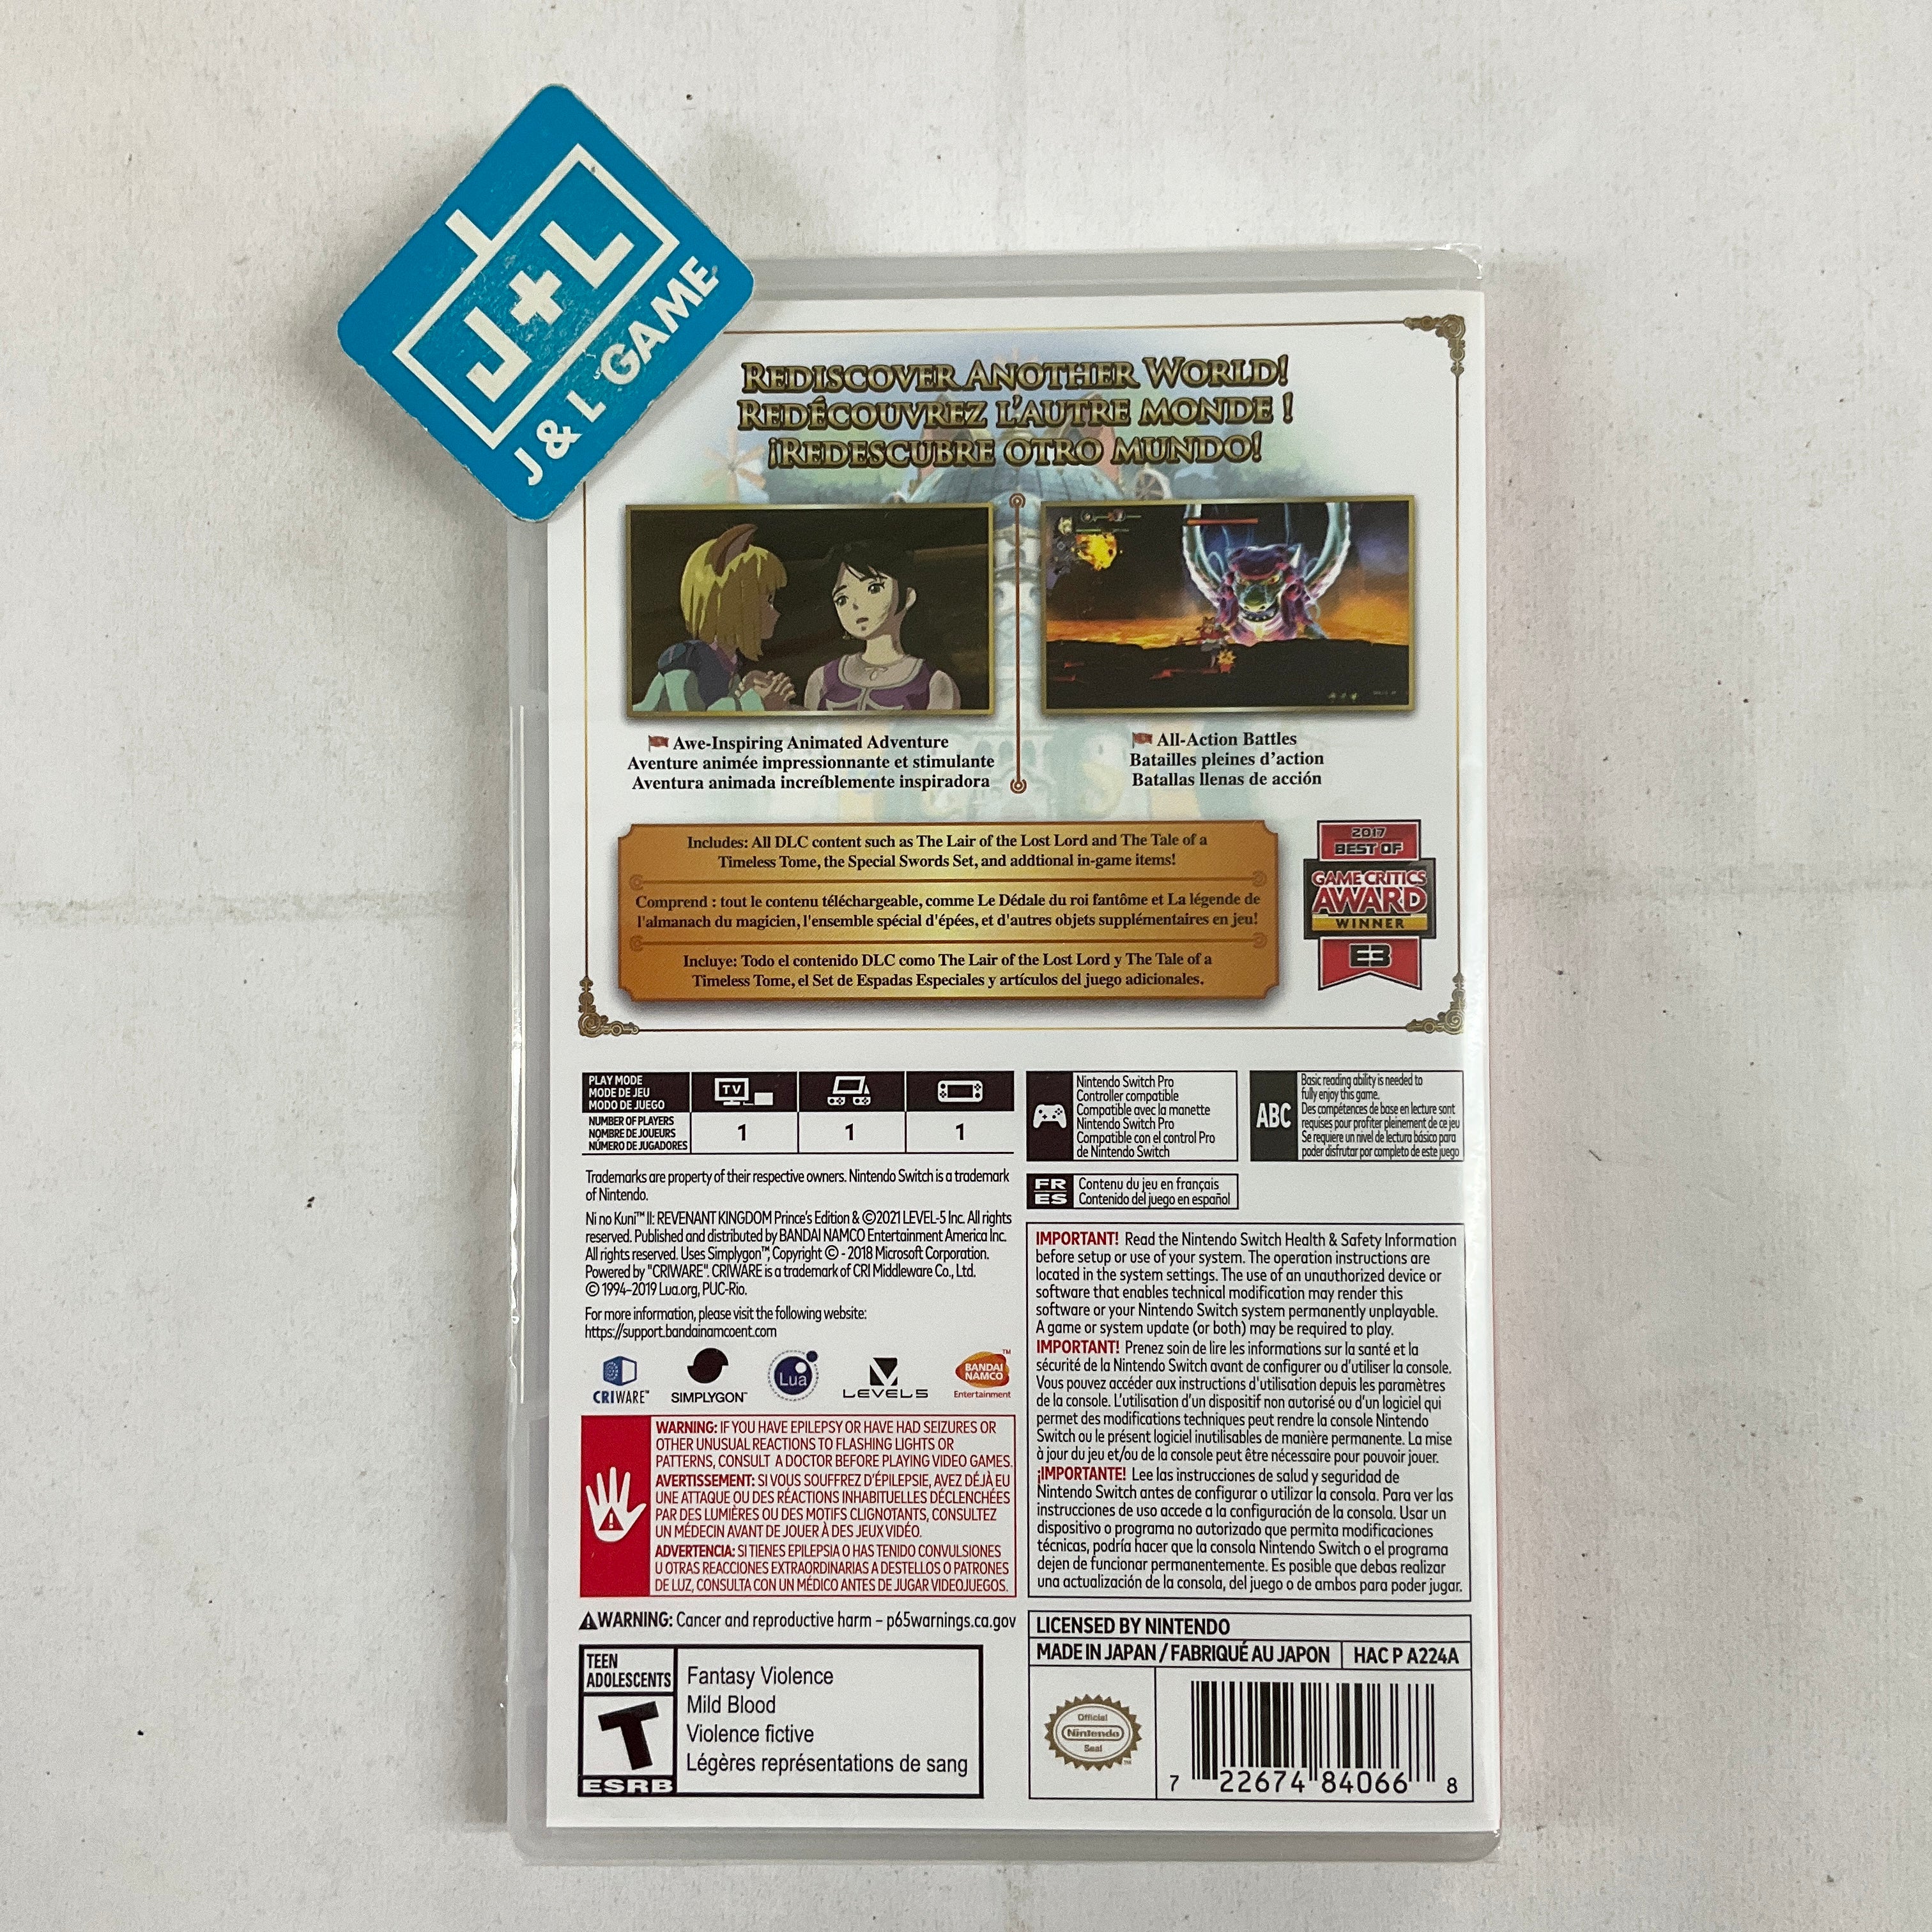 Ni no Kuni II: Revenant Kingdom Prince's Edition - (NSW) Nintendo Switch Video Games BANDAI NAMCO Entertainment   